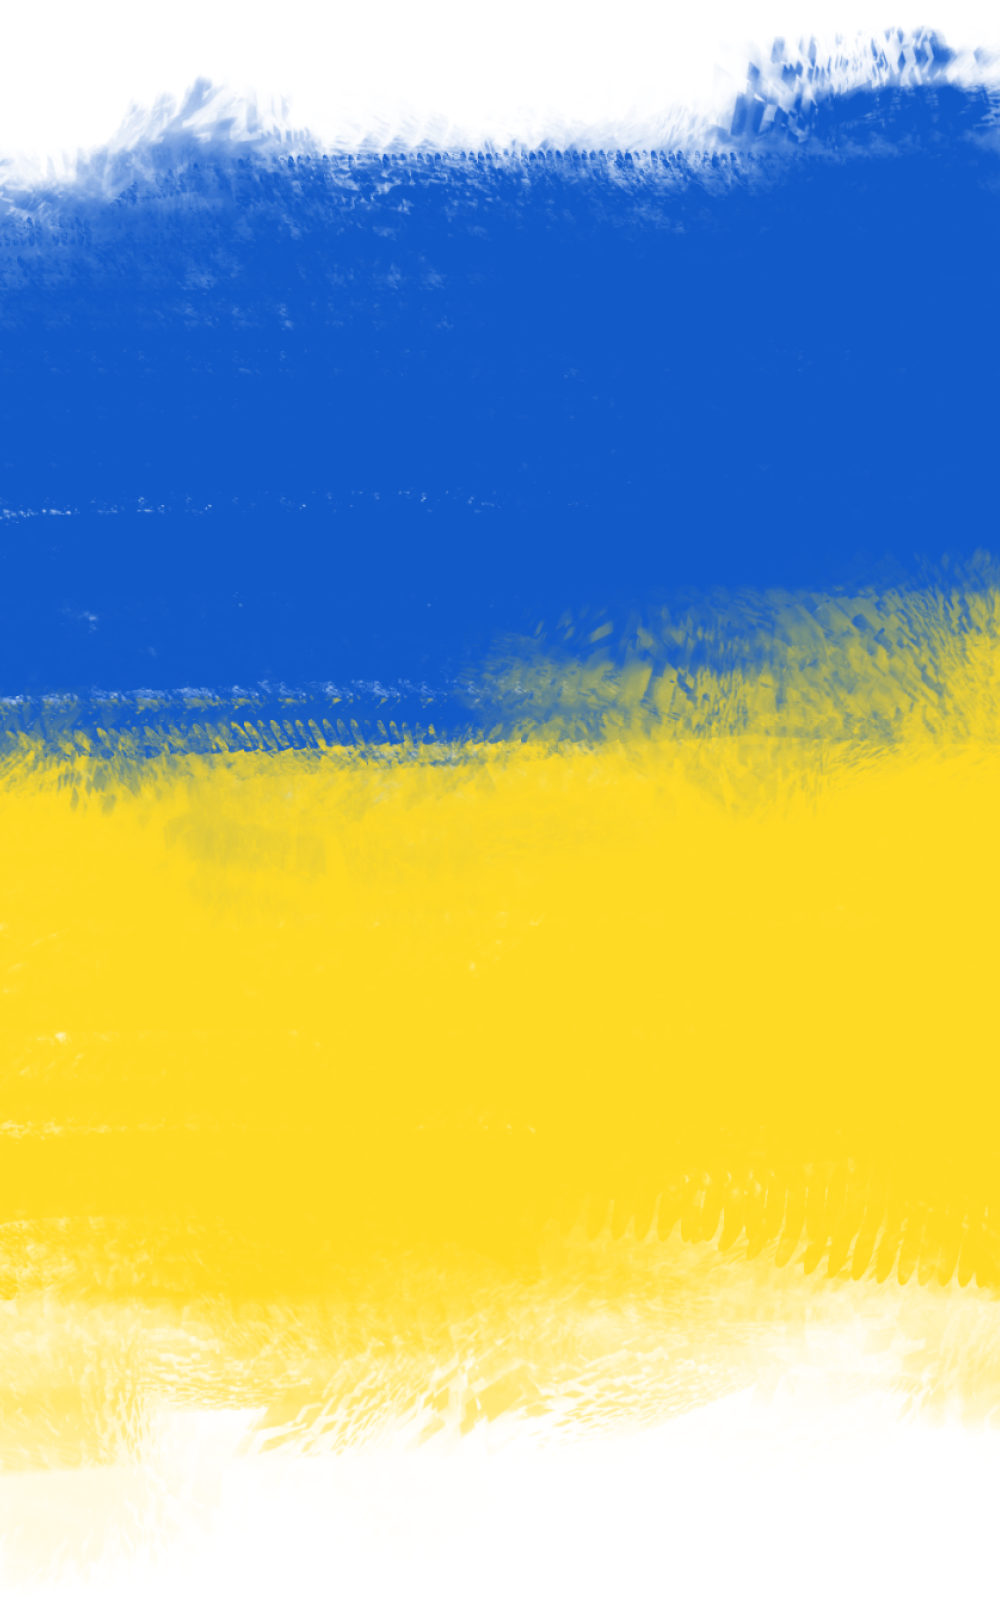 blurred graphic imitating Ukrainian flag